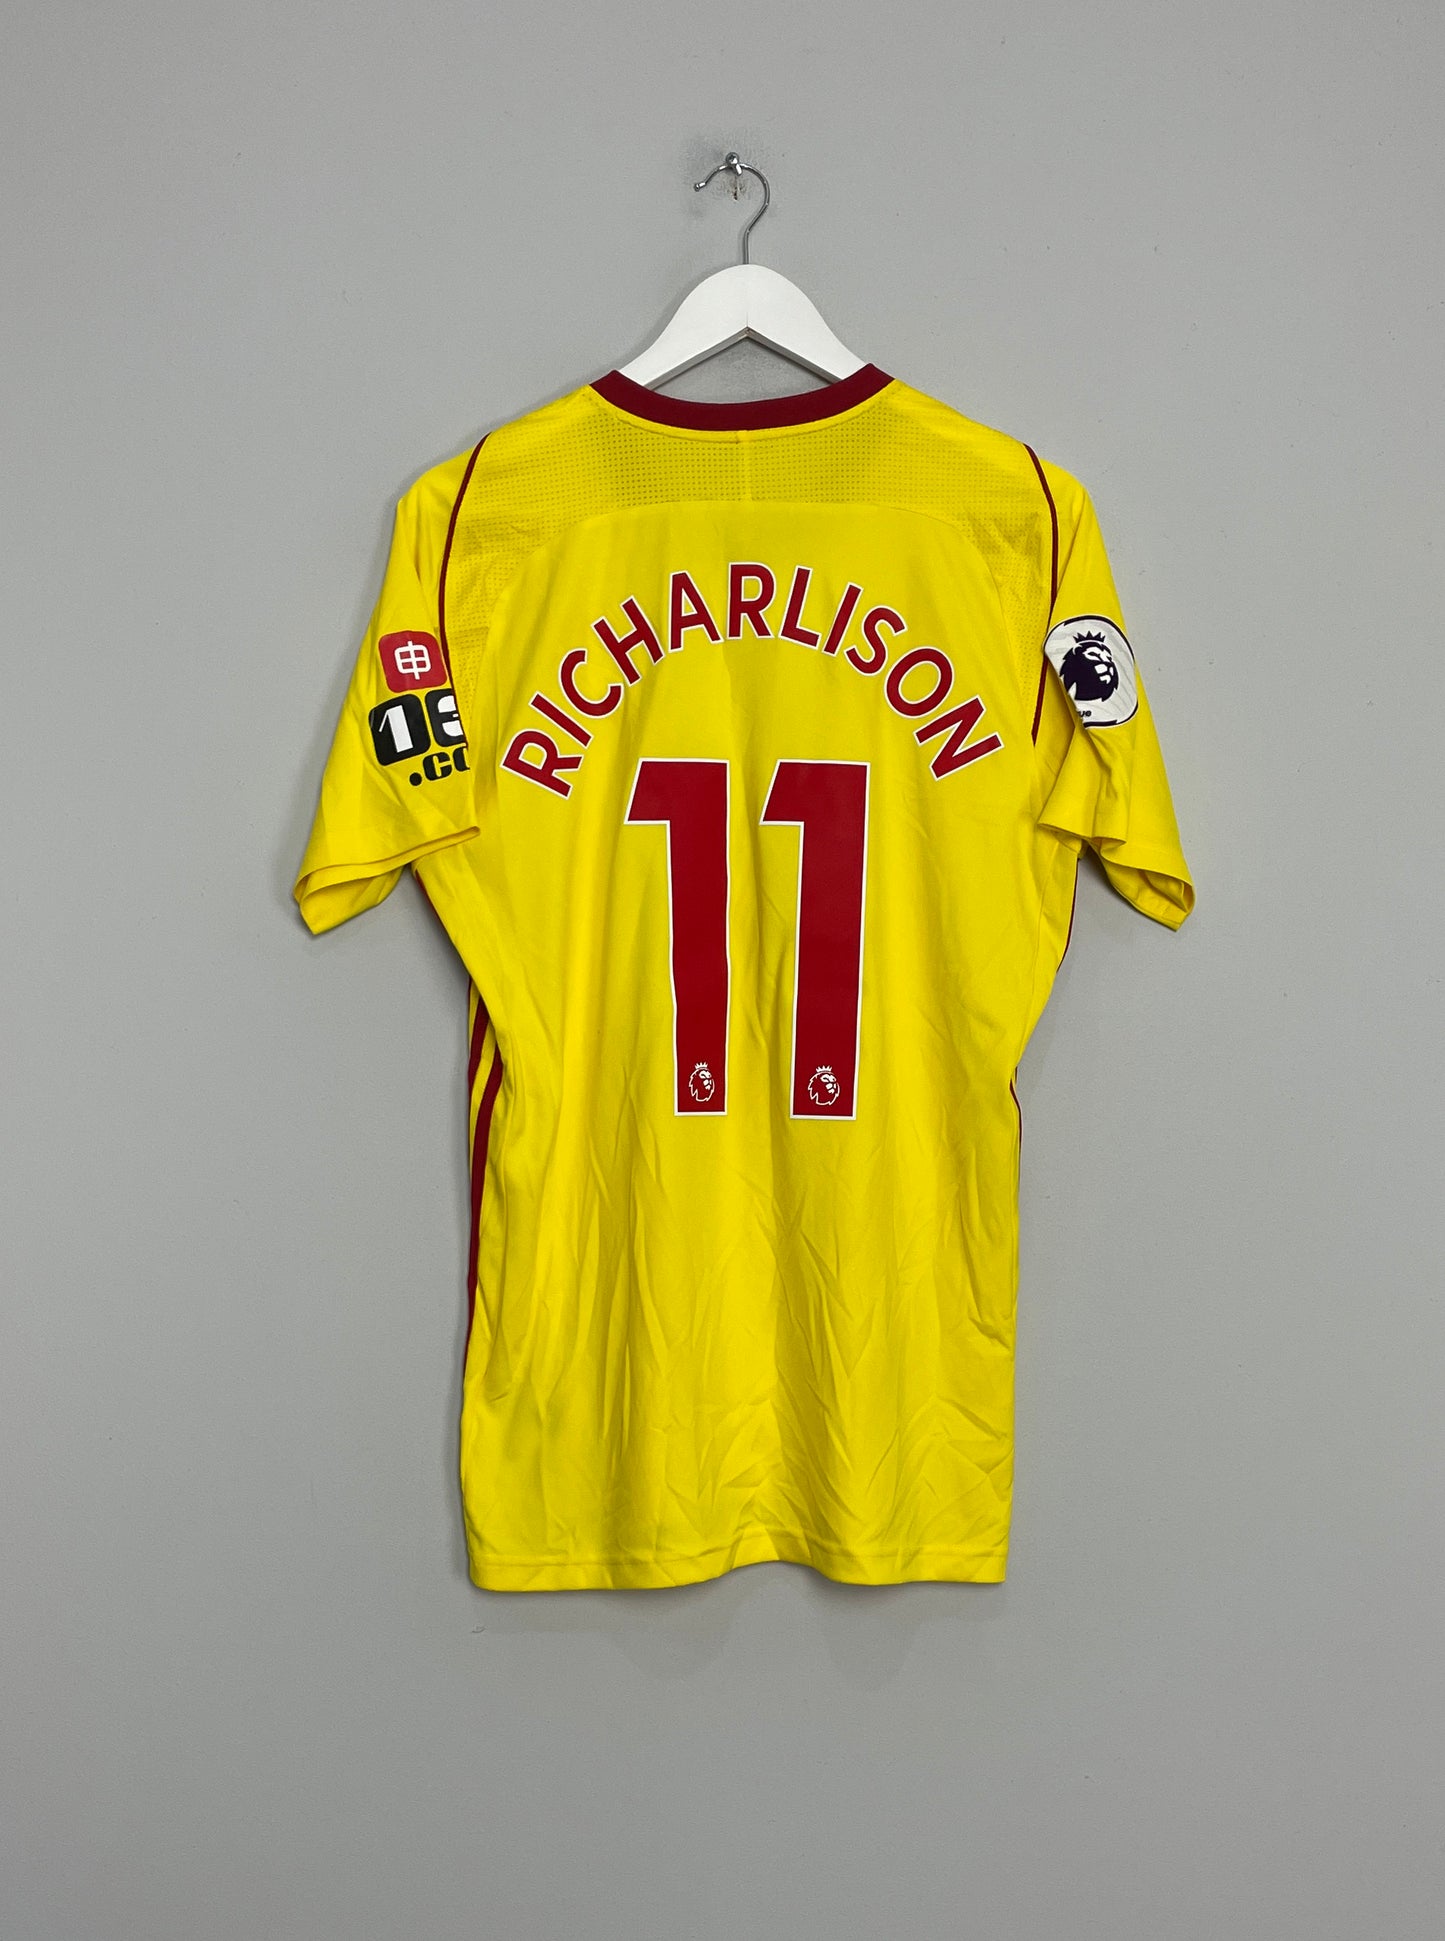 Image of the Watford Richarlison shirt from the 2017/18 season